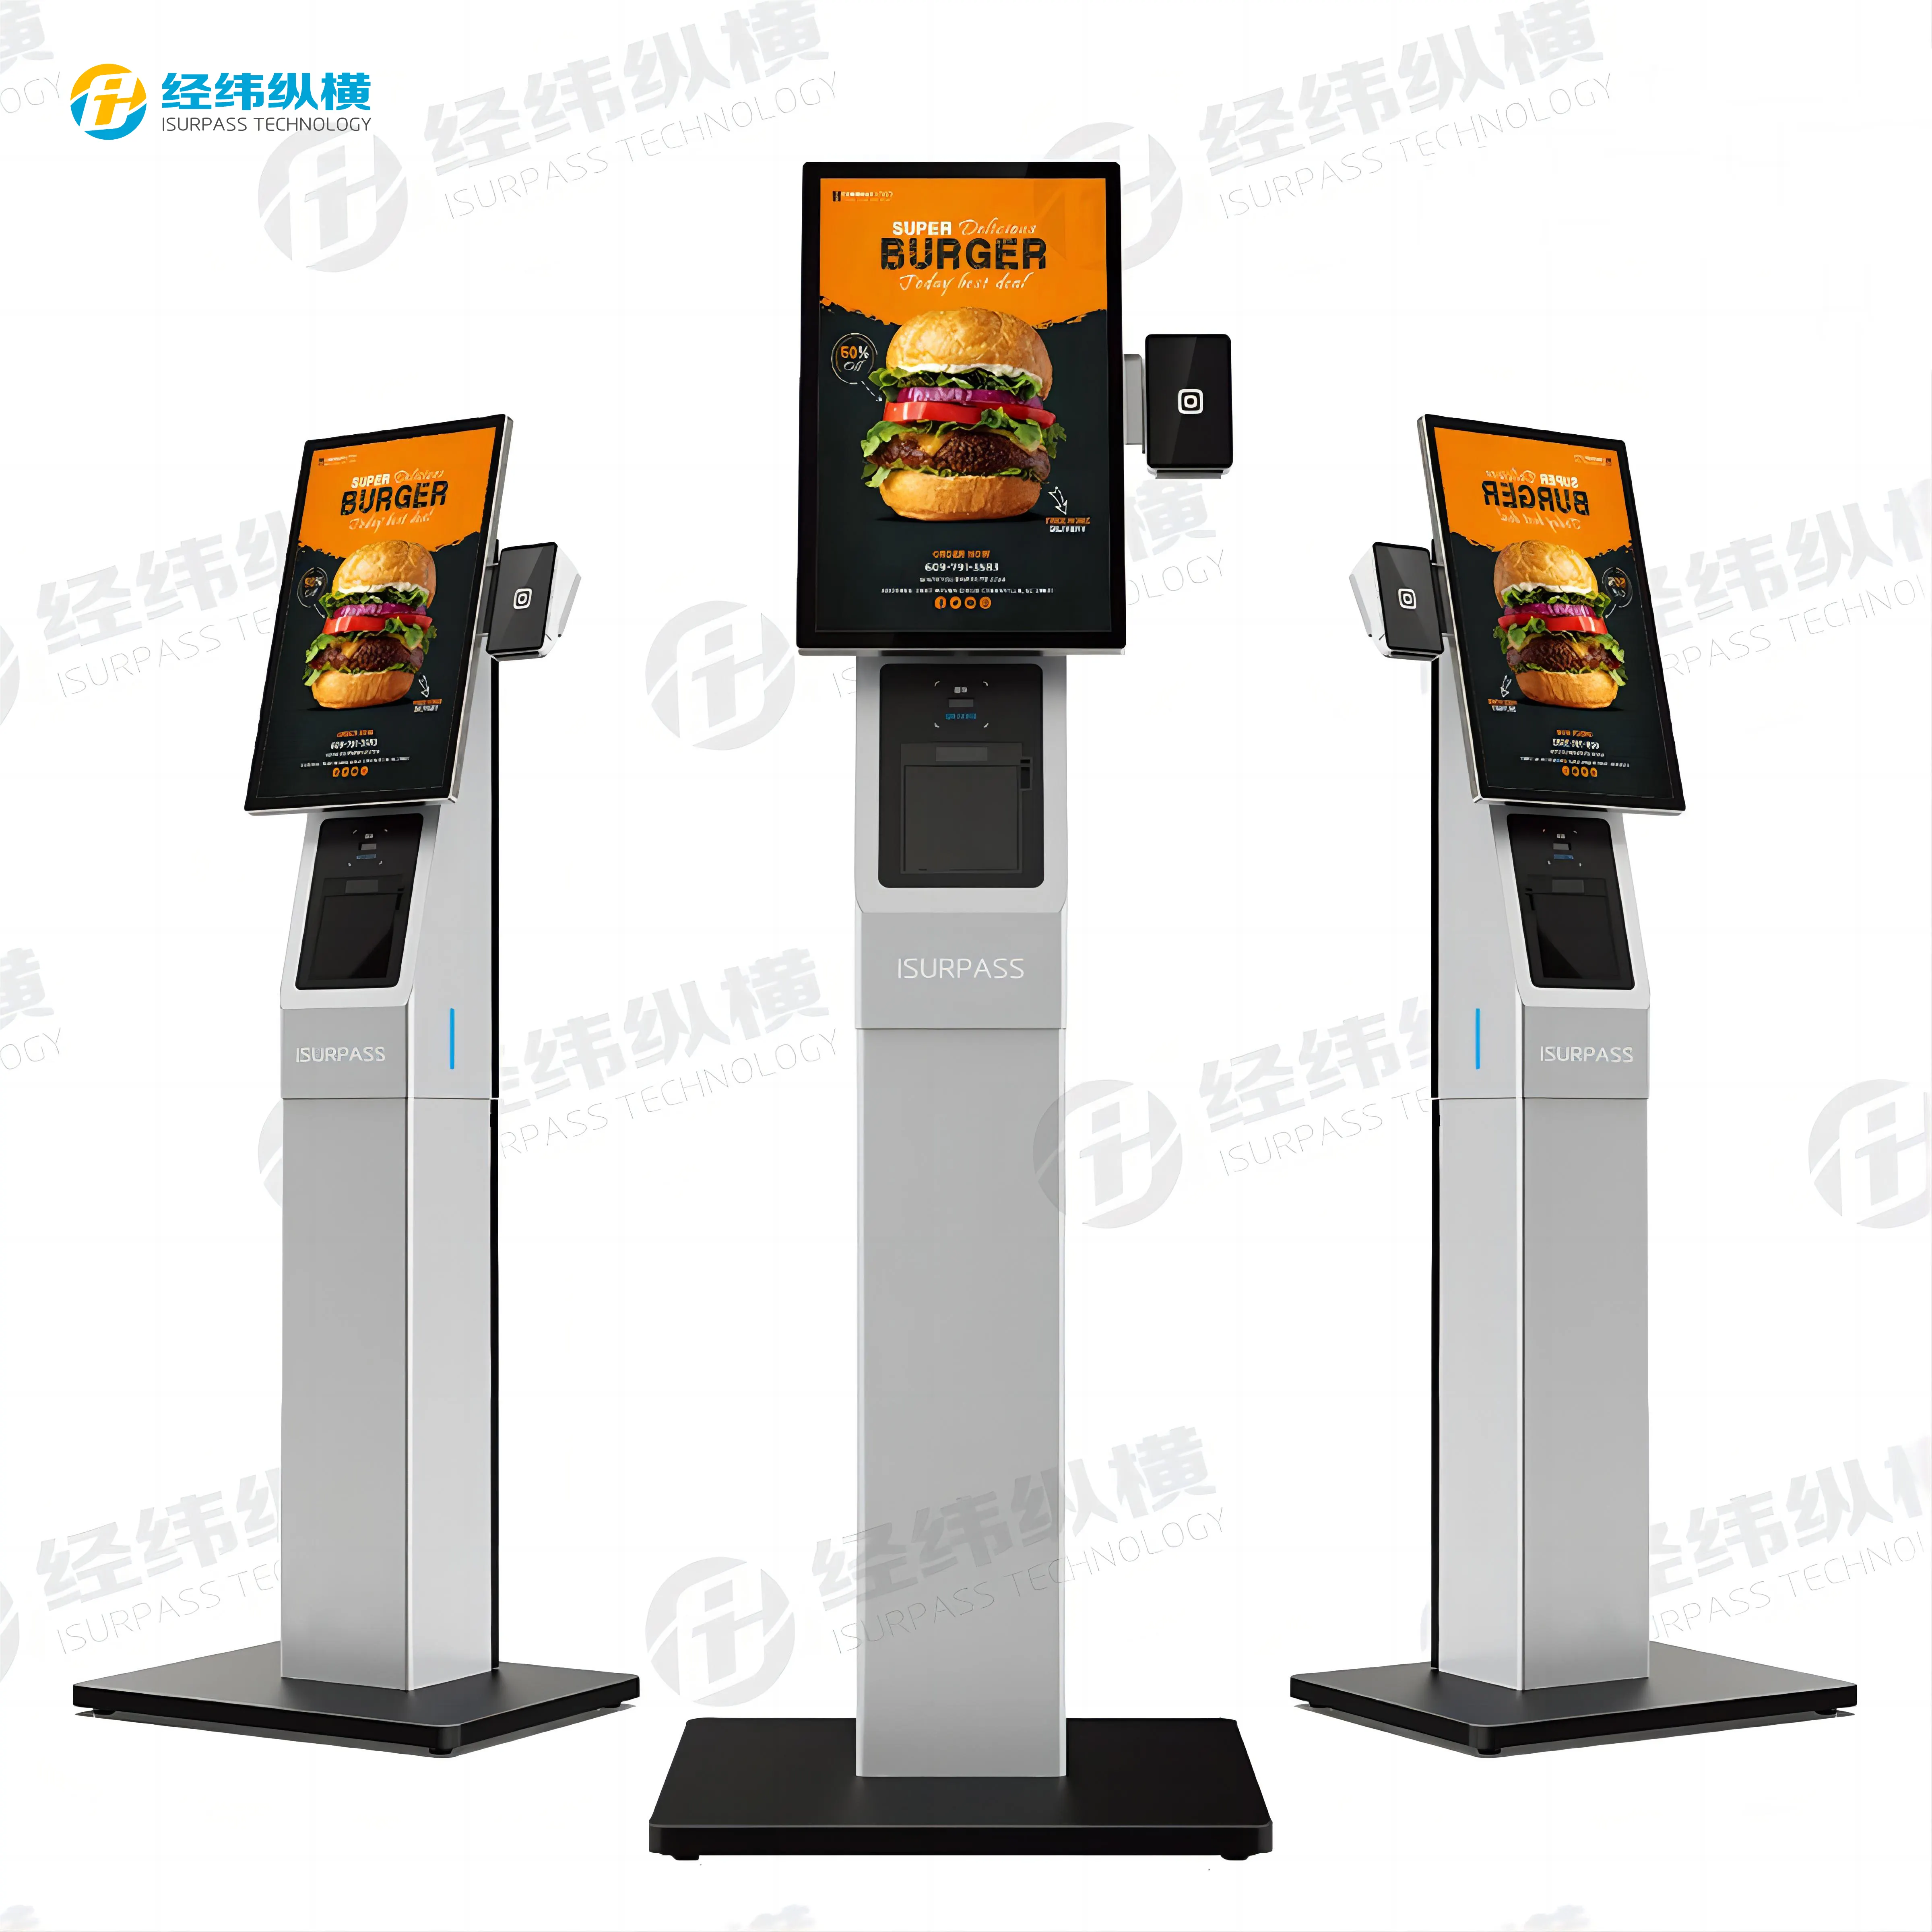 Fast-Food-Kioske Selbst bestellende Kiosk-Rechnung Zahlung Lebensmittel bestellung terminal Selbstbedienungs-Bestell maschine Kiosk für Mc Donalds Burger